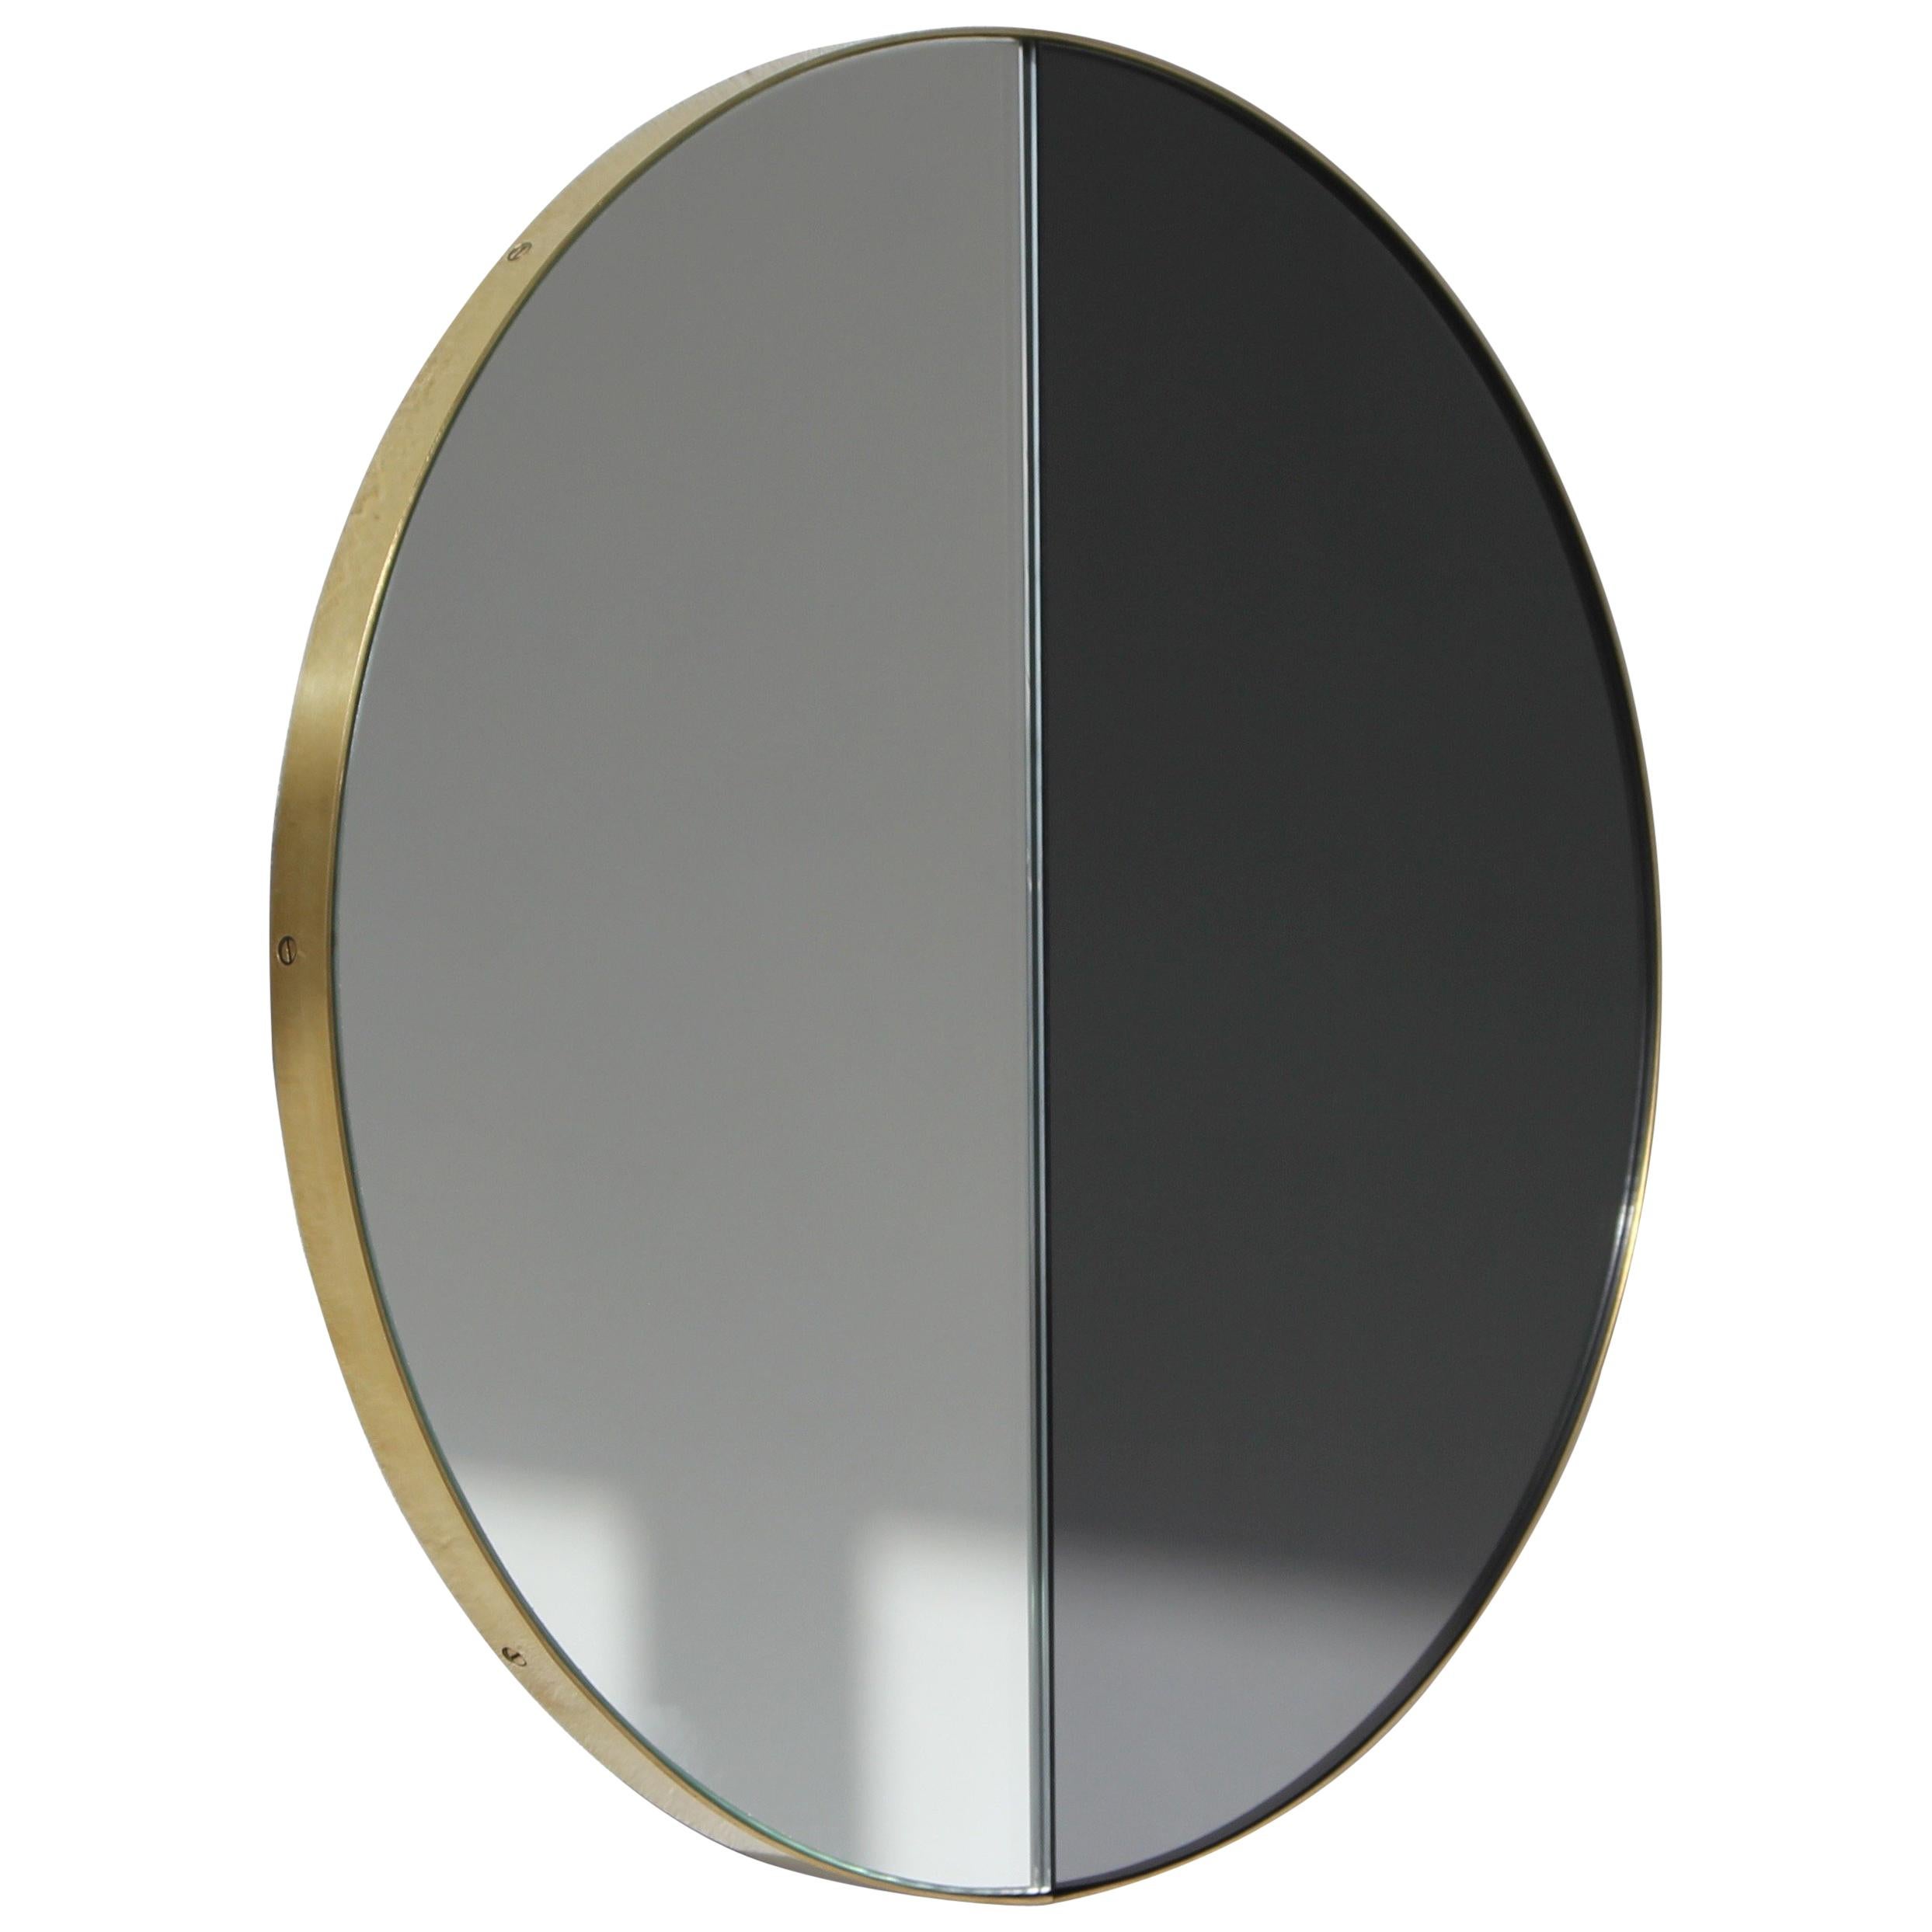 Orbis Dualis Mixed Tint Contemporary Round Mirror with Brass Frame, Medium